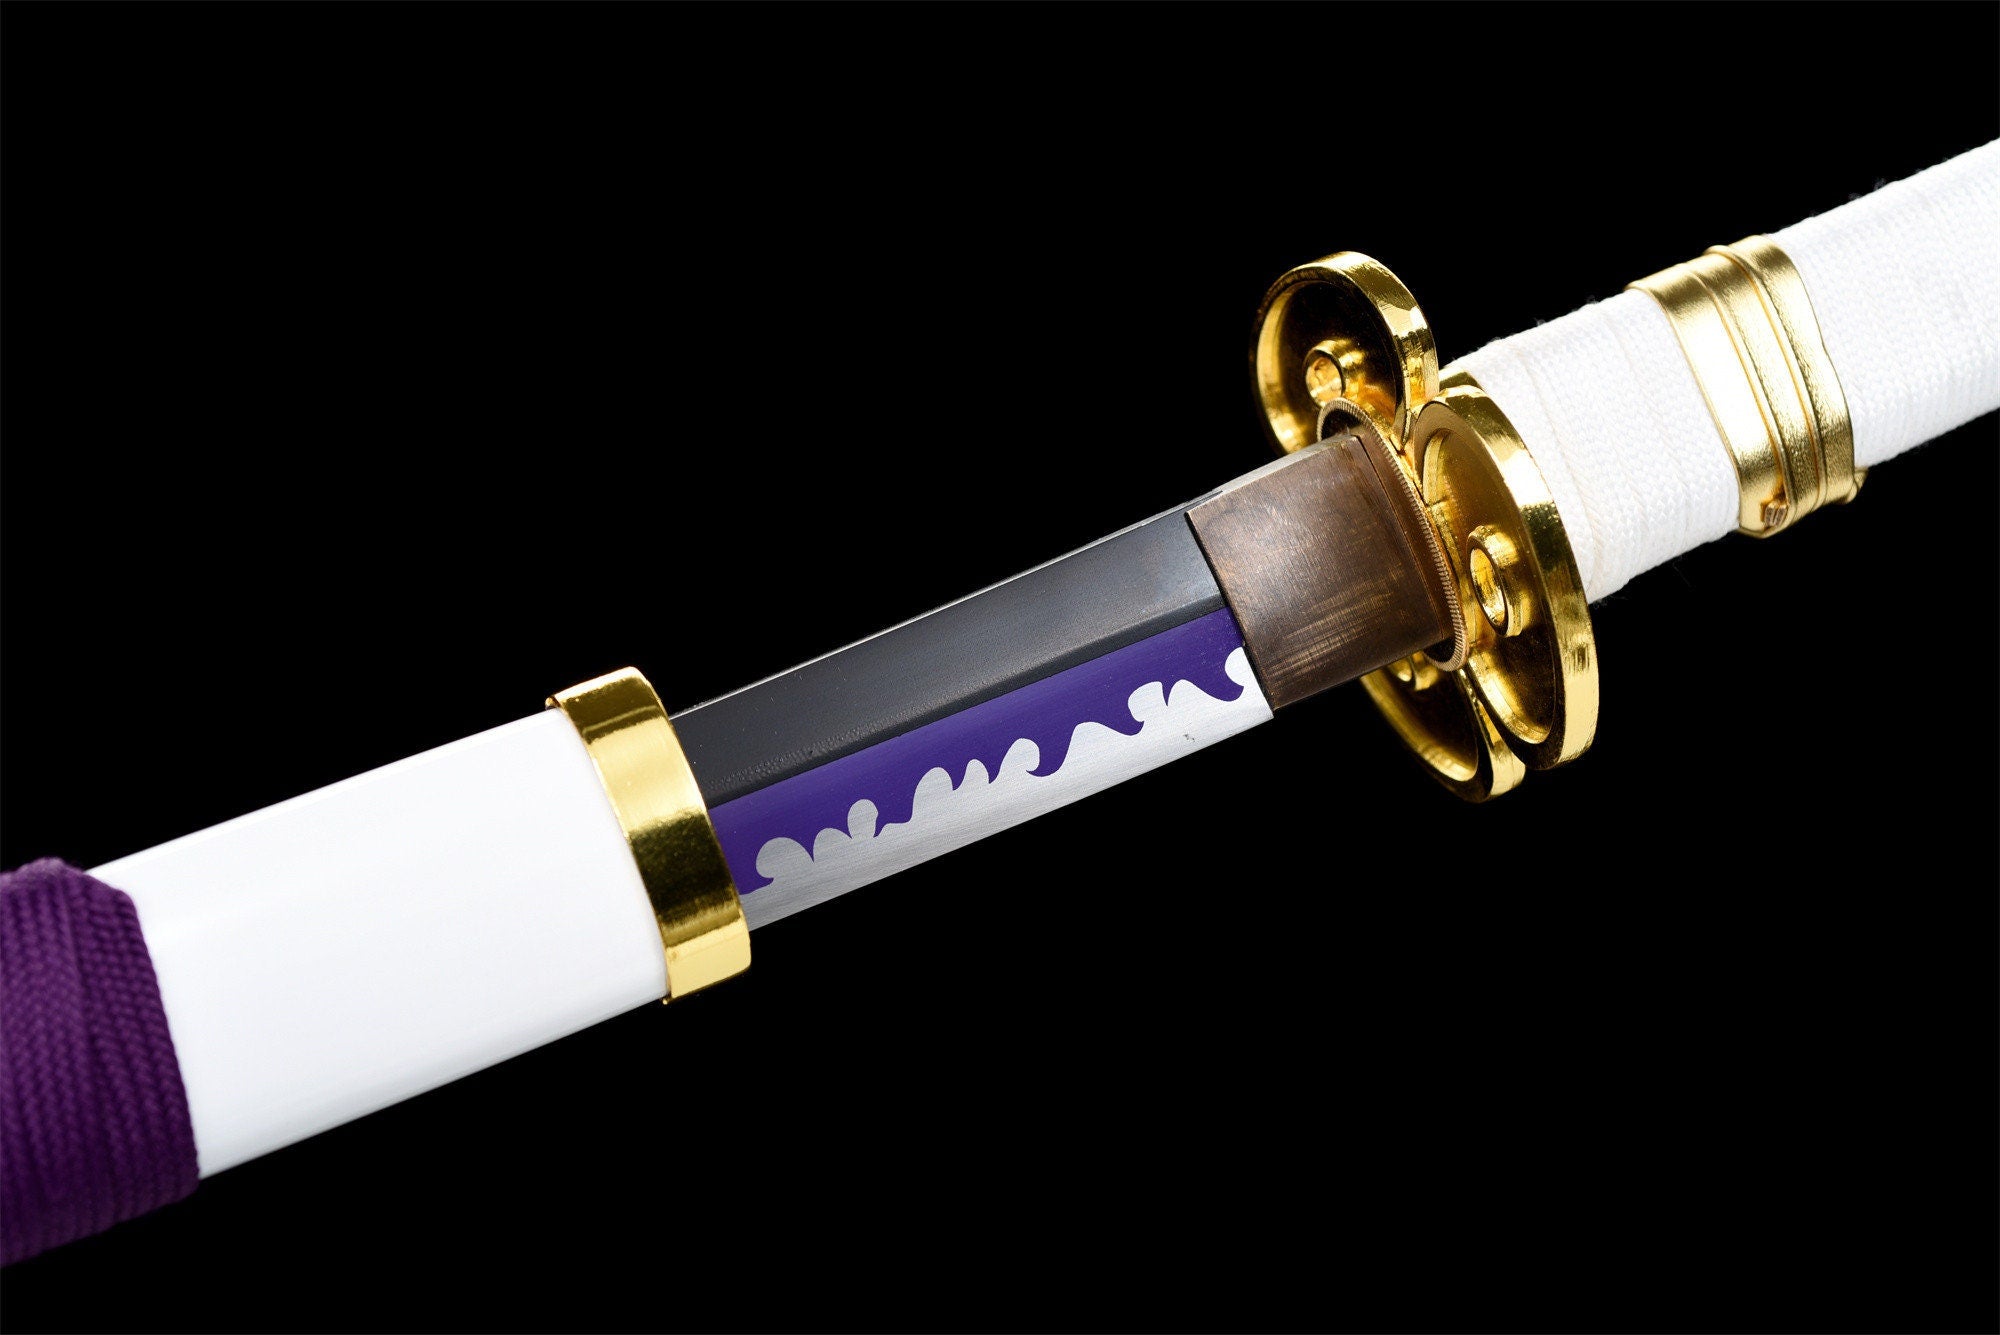 Weißes Anime-Schwert, lila Klinge, One Piece, Anime Cosplay, echtes japanisches Samurai-Schwert, handgefertigtes Anime-Katana, Kohlenstoffstahl, Full Tang